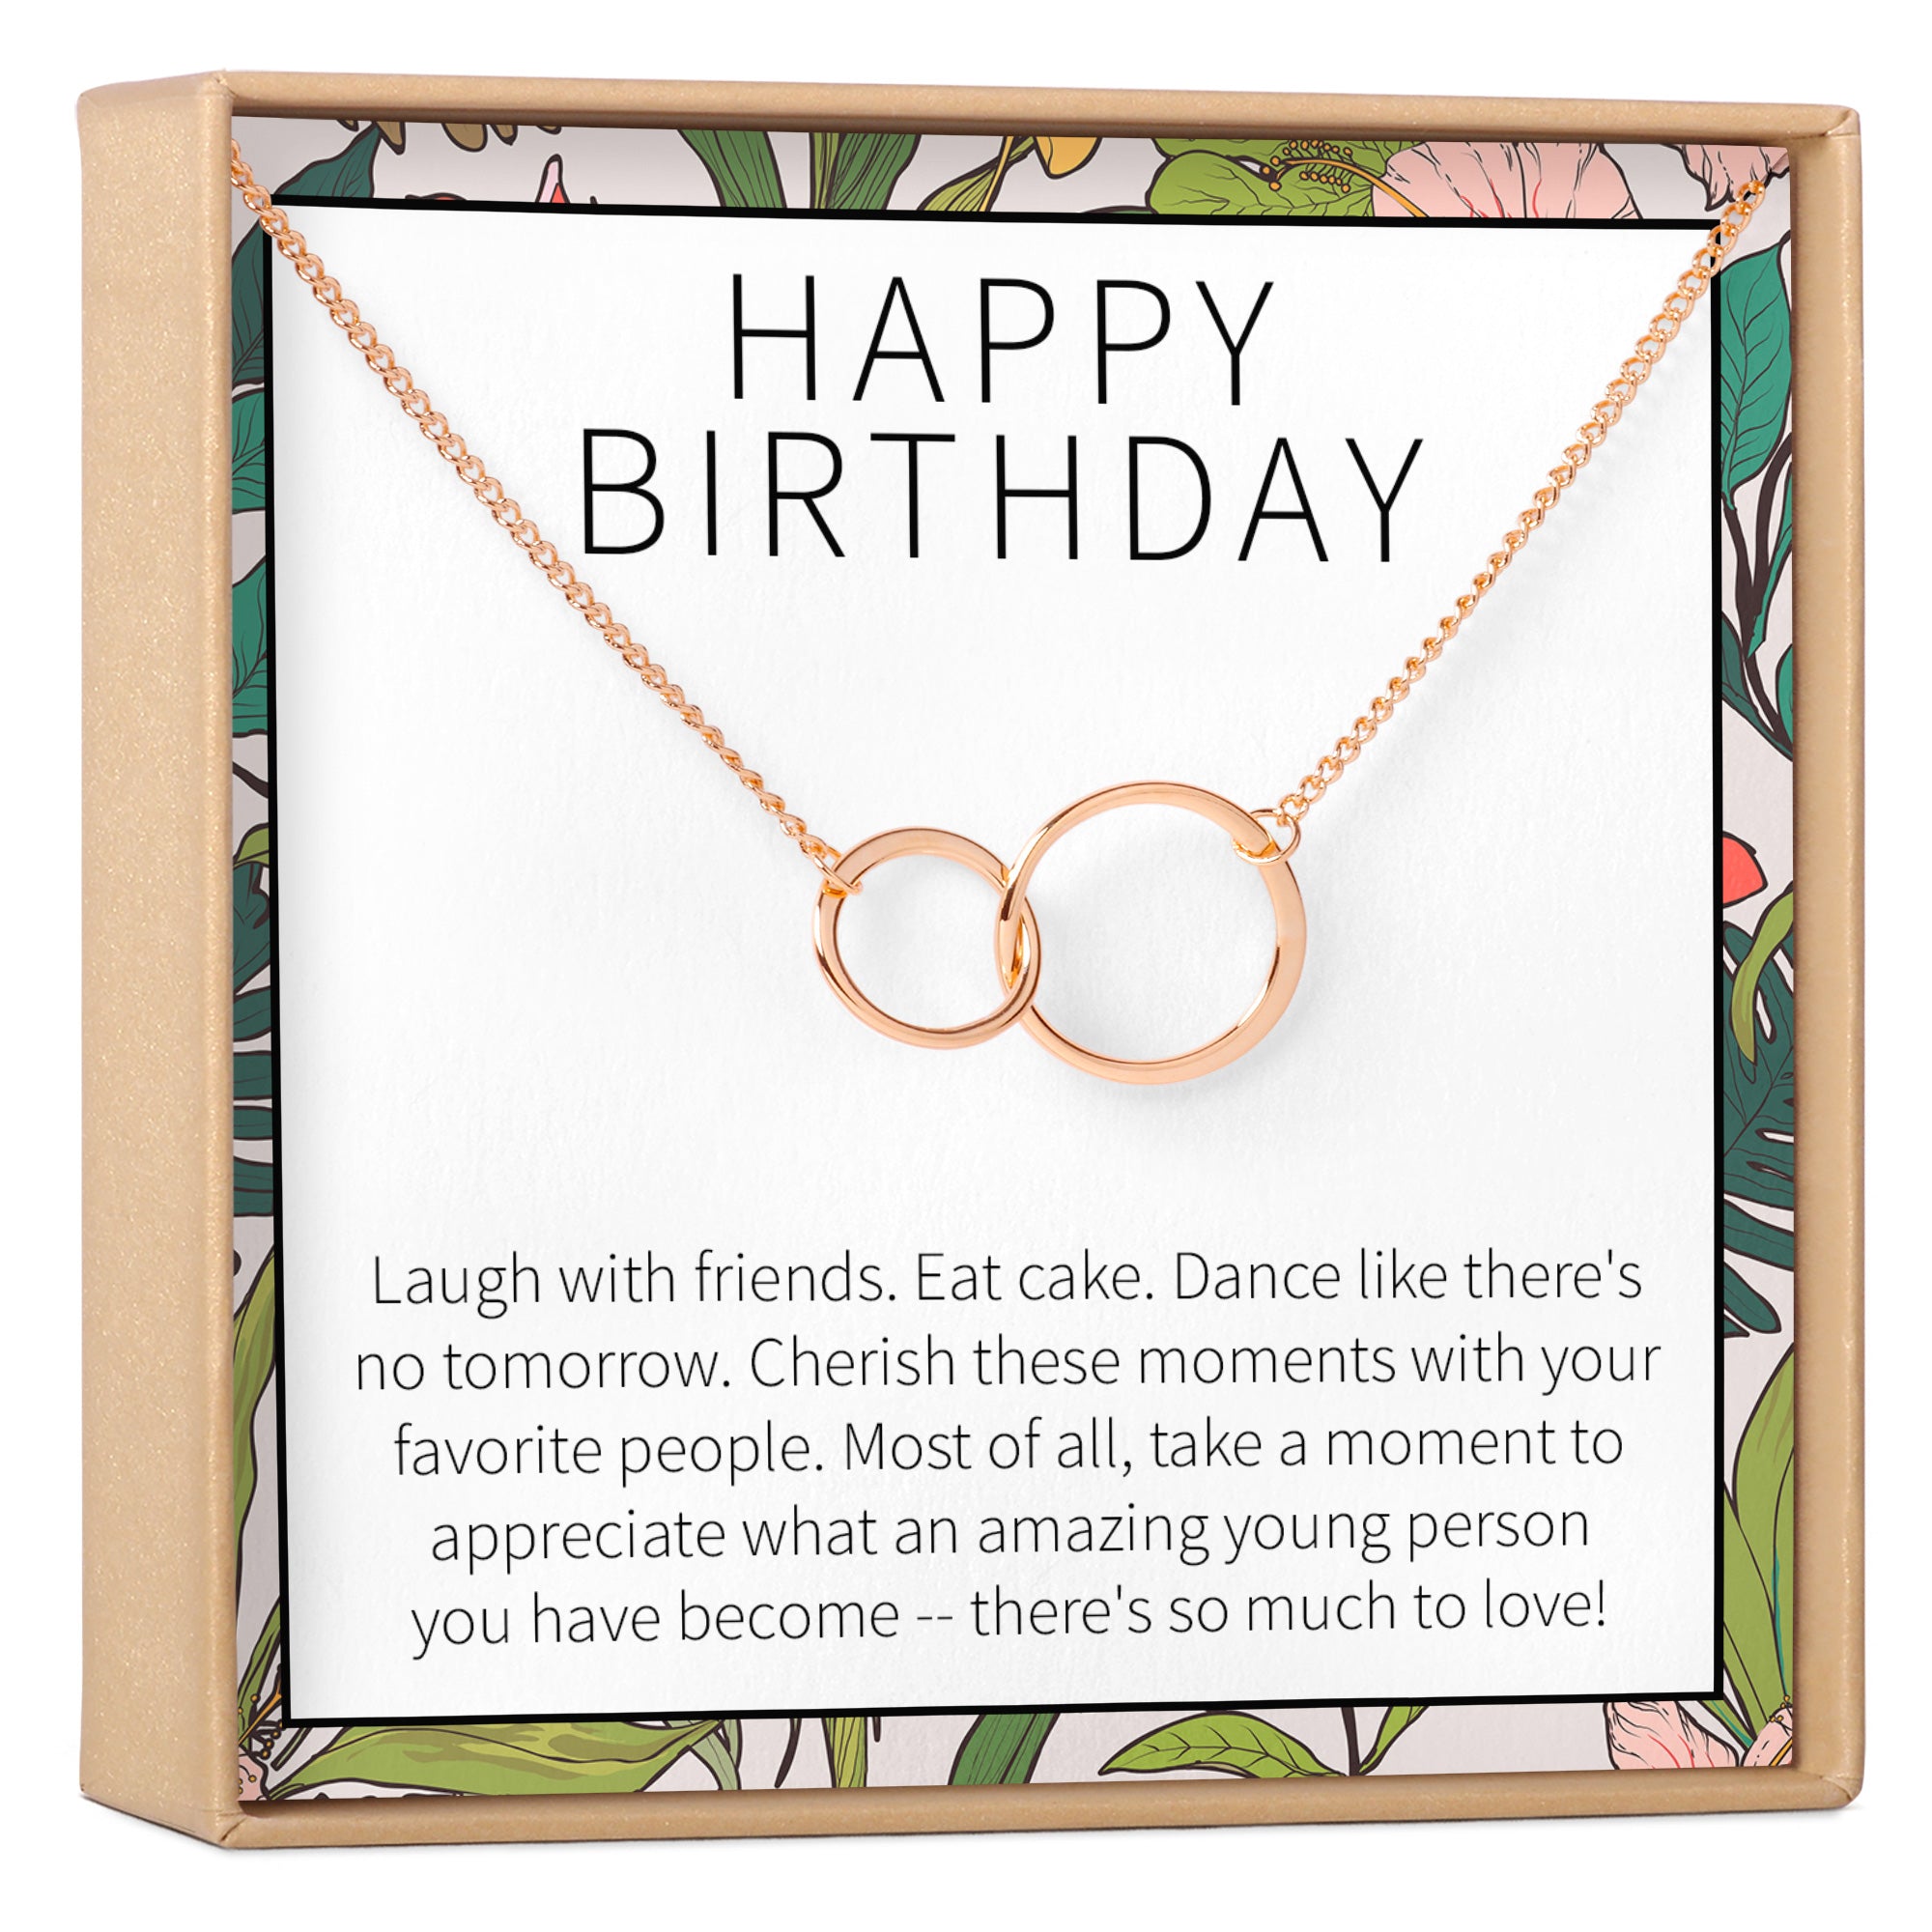 3 Easy DIY Birthday Gift Ideas for Best Friend/ Handmade Birthday Gifts/  Paper Gift Ideas - YouTube